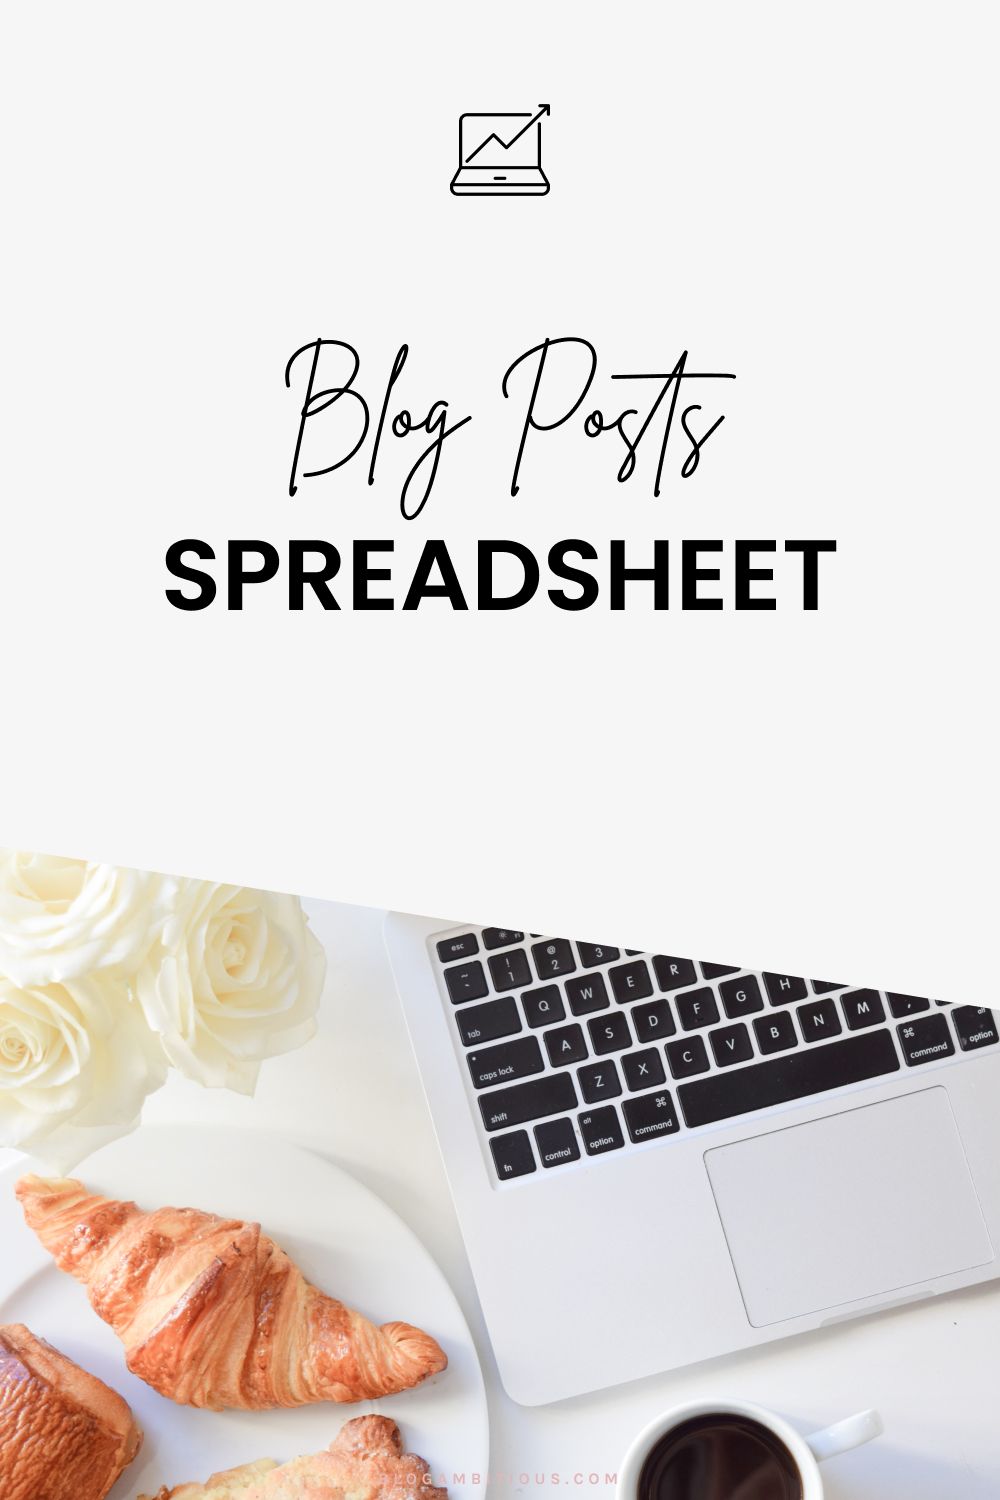 Keep A Blog Posts Spreadsheet